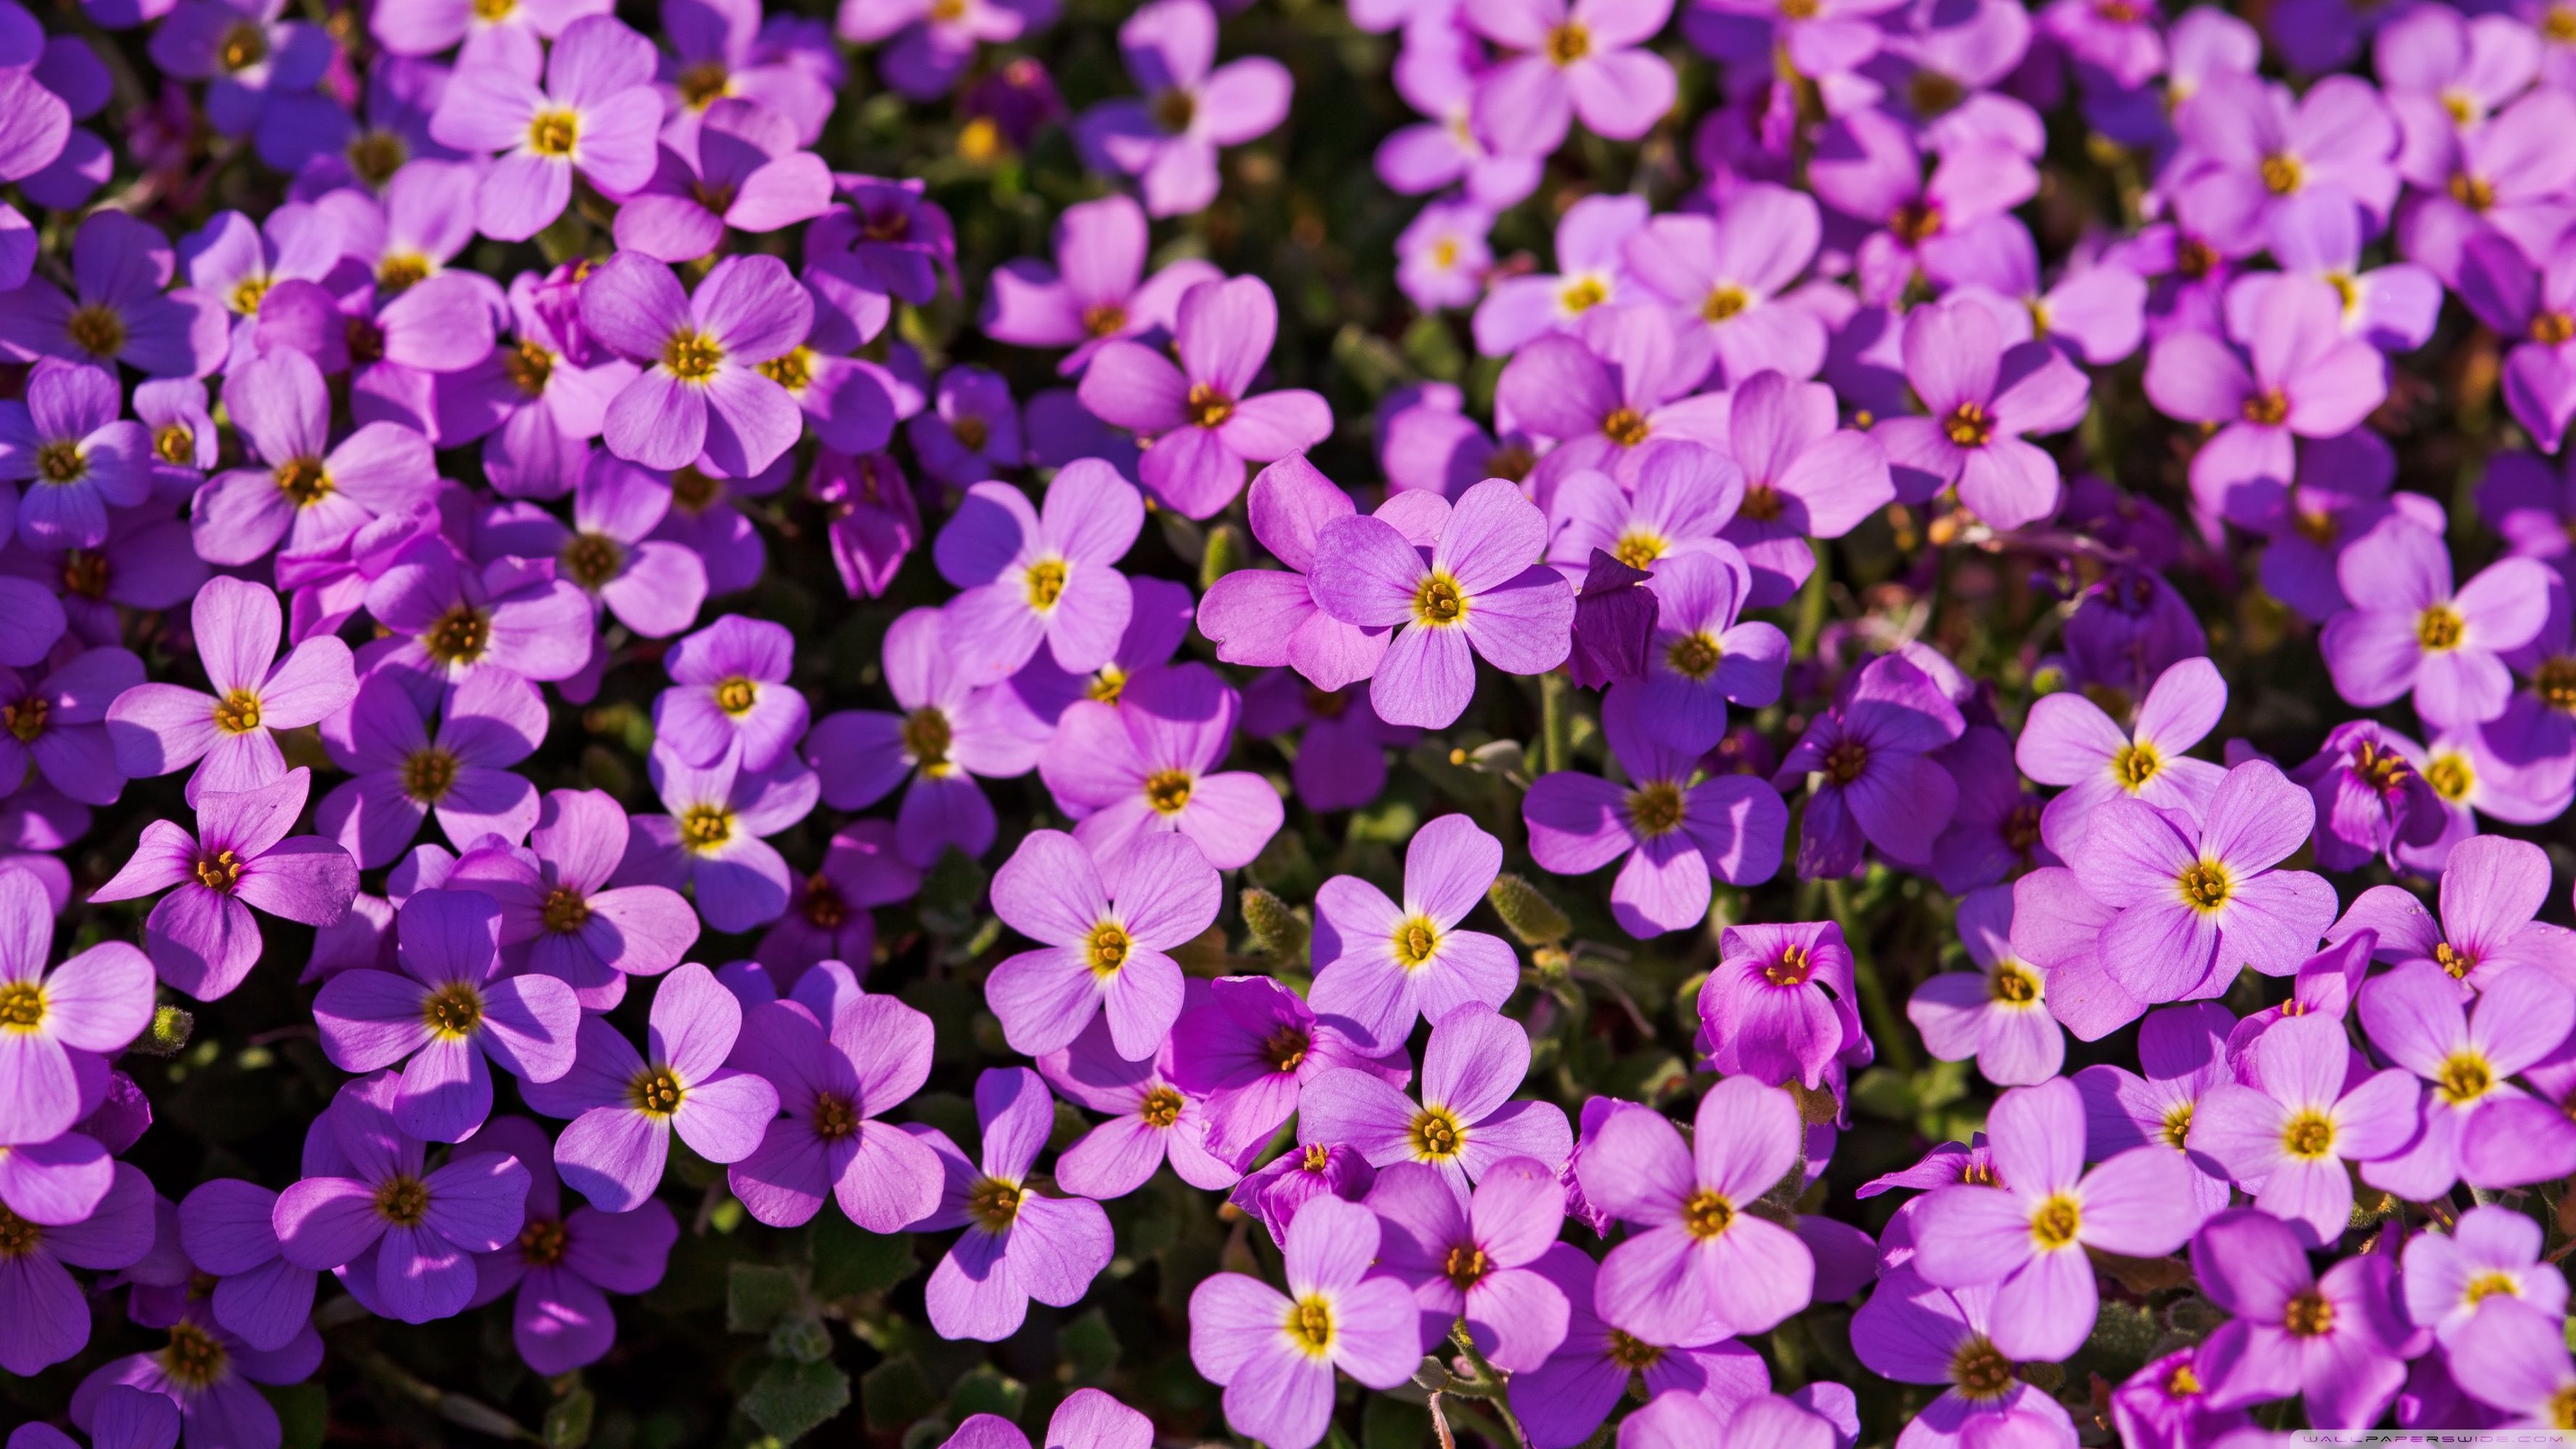 A Lot Of Purple Flowers Ultra HD Desktop Background Wallpaper for 4K UHD TV, Multi Display, Dual Monitor, Tablet